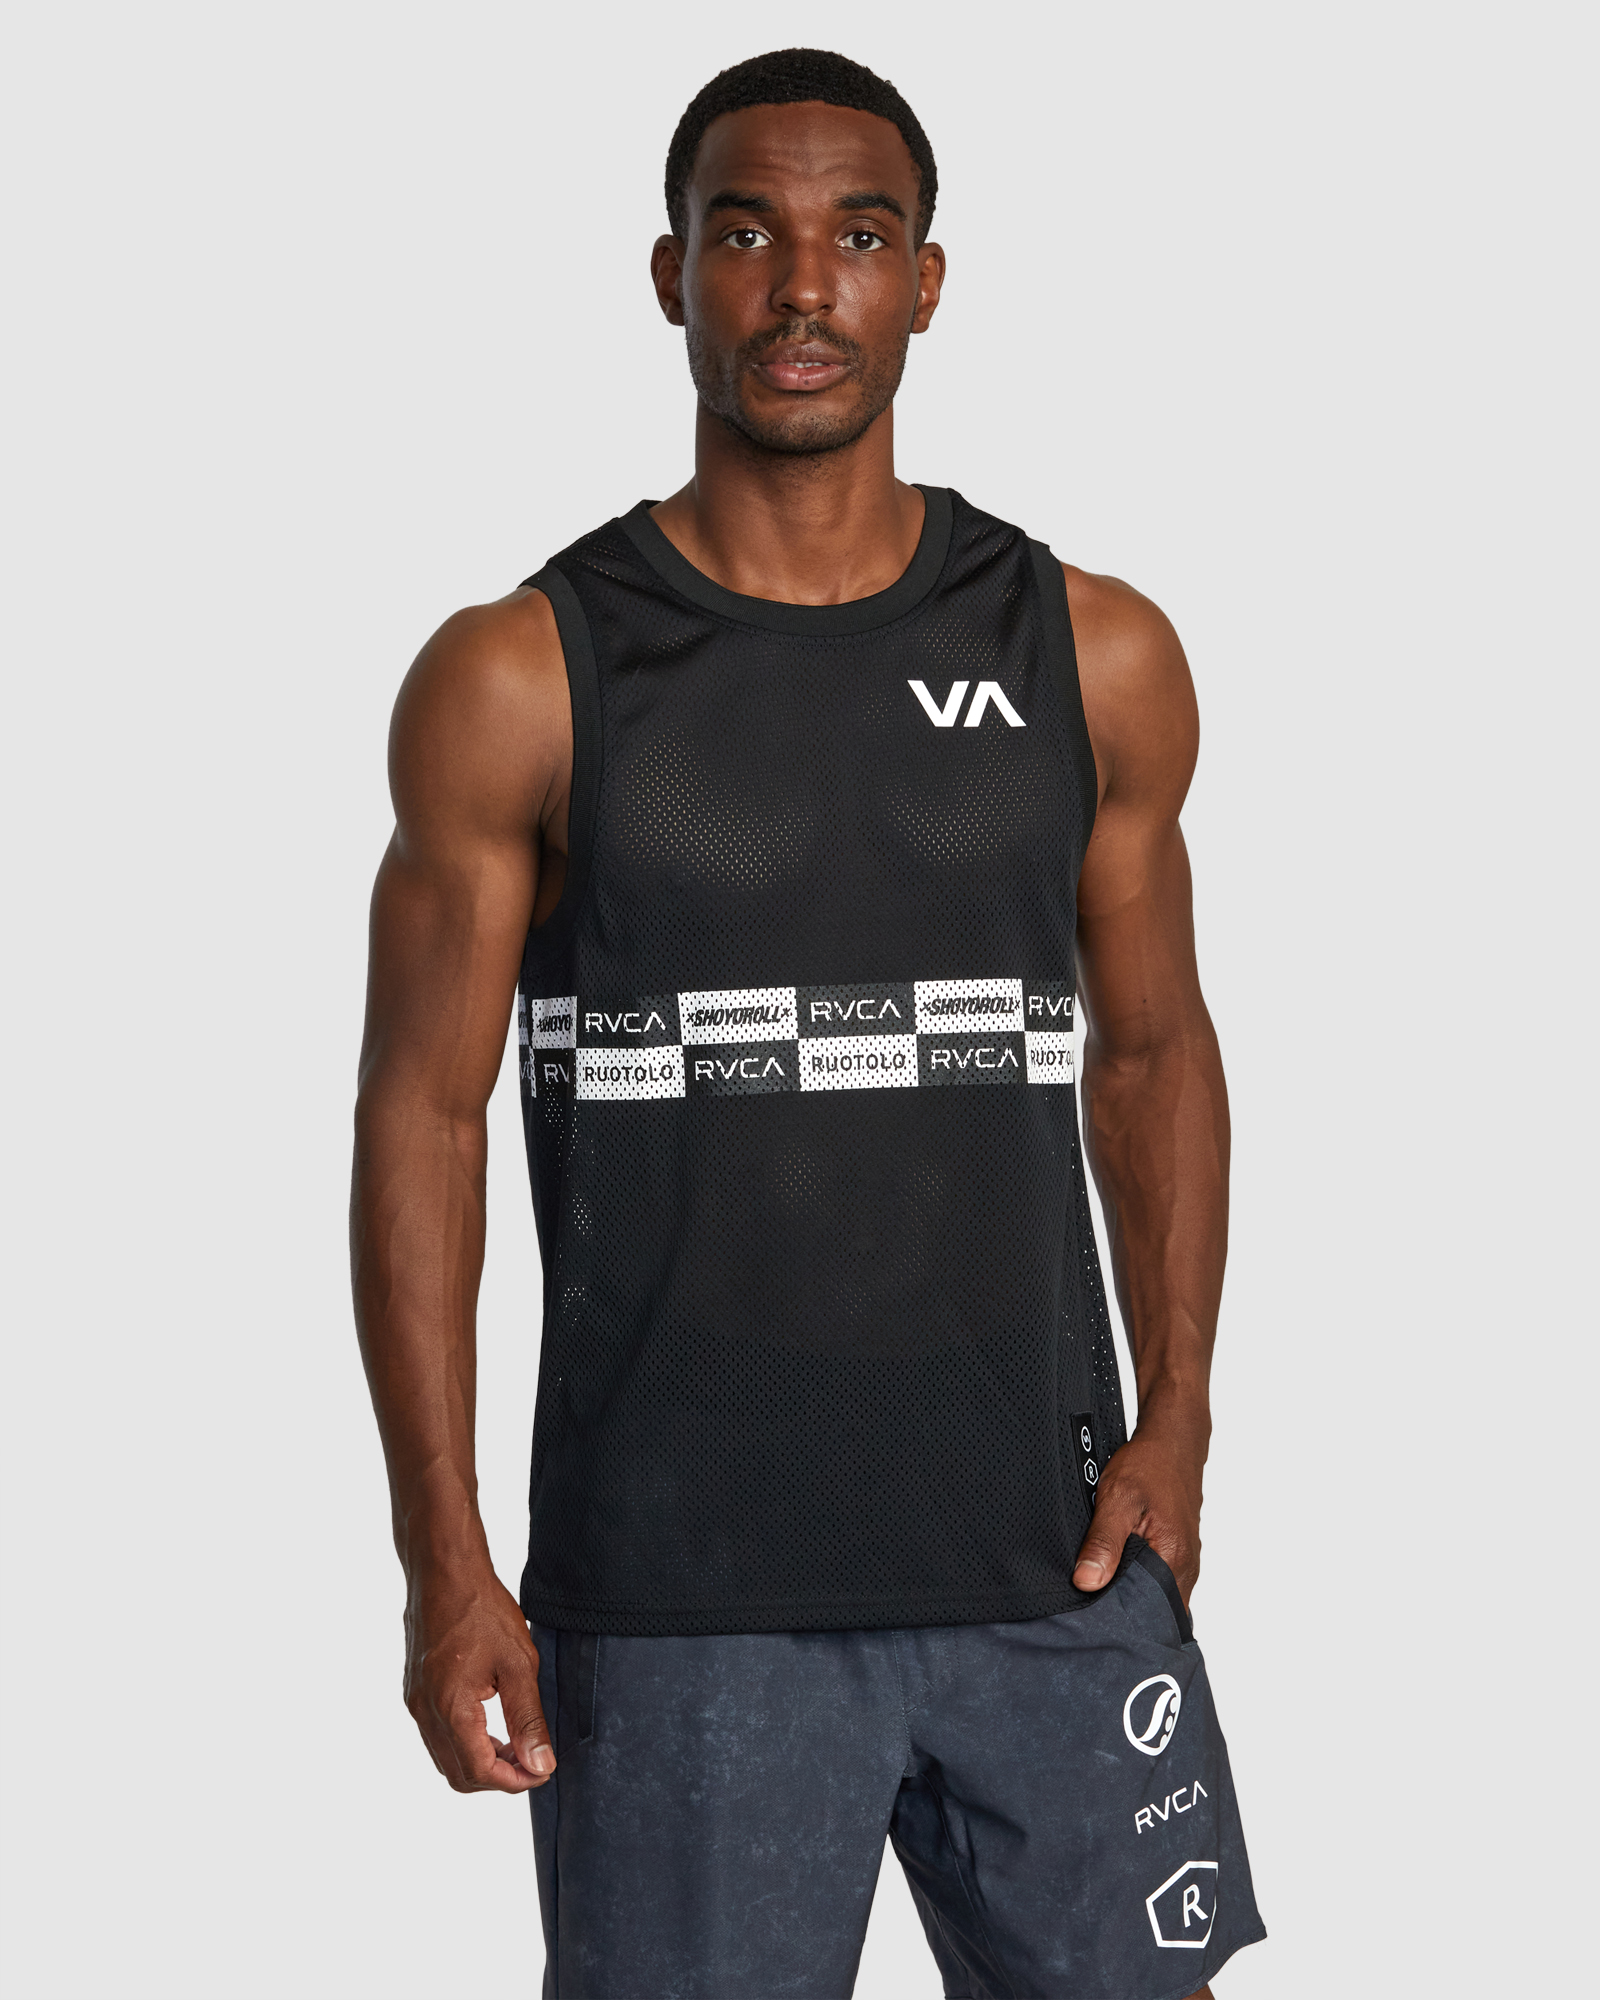 Rvca Ruotolo - Basketball Jersey For Men - Black | SurfStitch